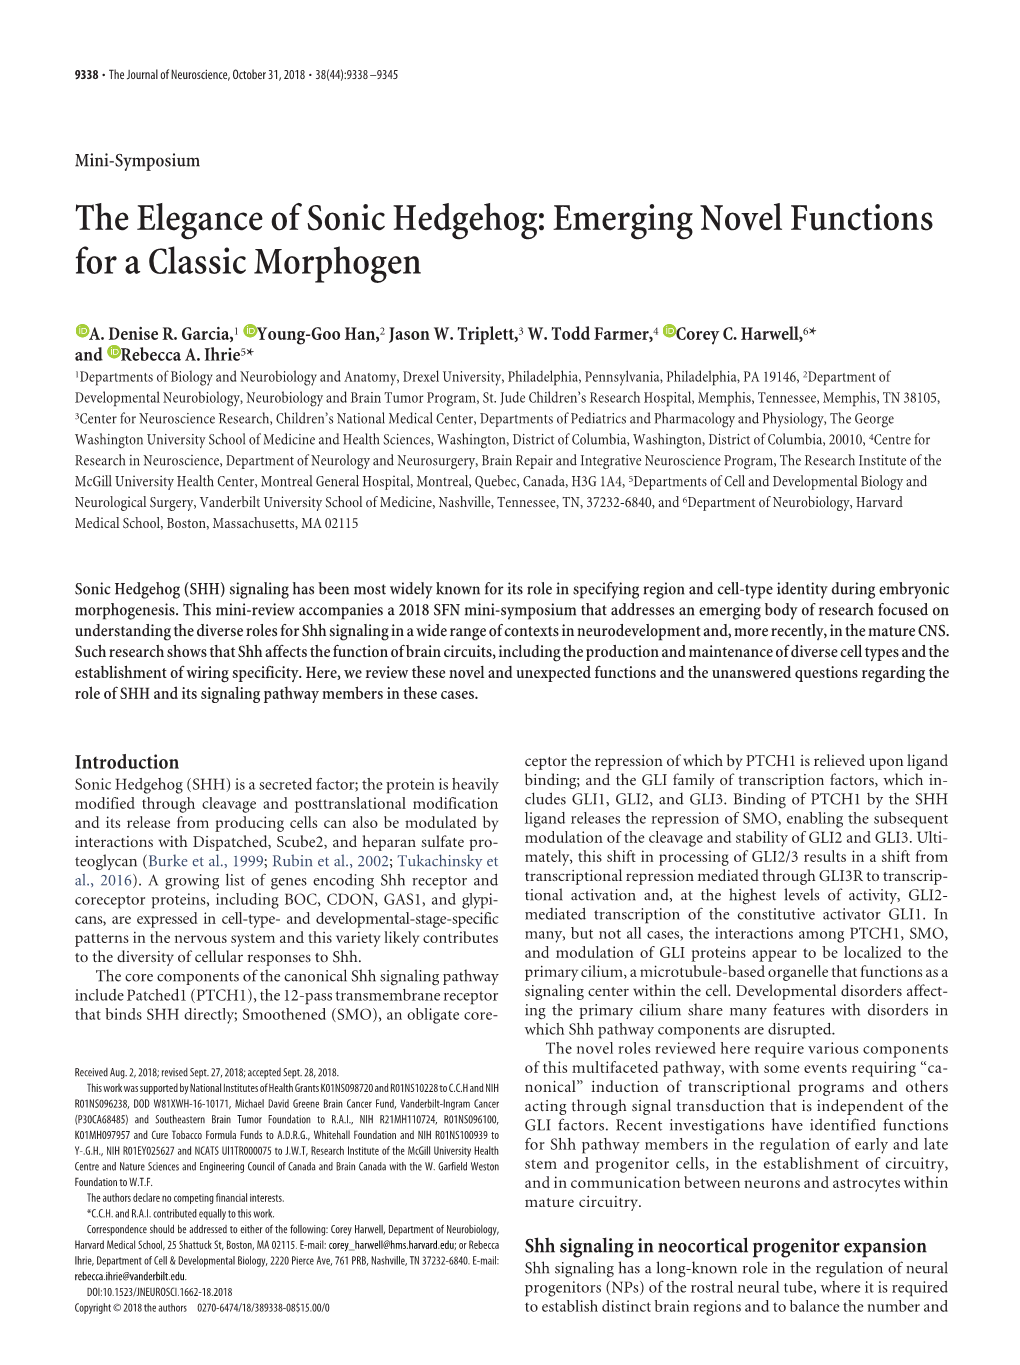 The Elegance of Sonic Hedgehog: Emerging Novel Functions for a Classic Morphogen